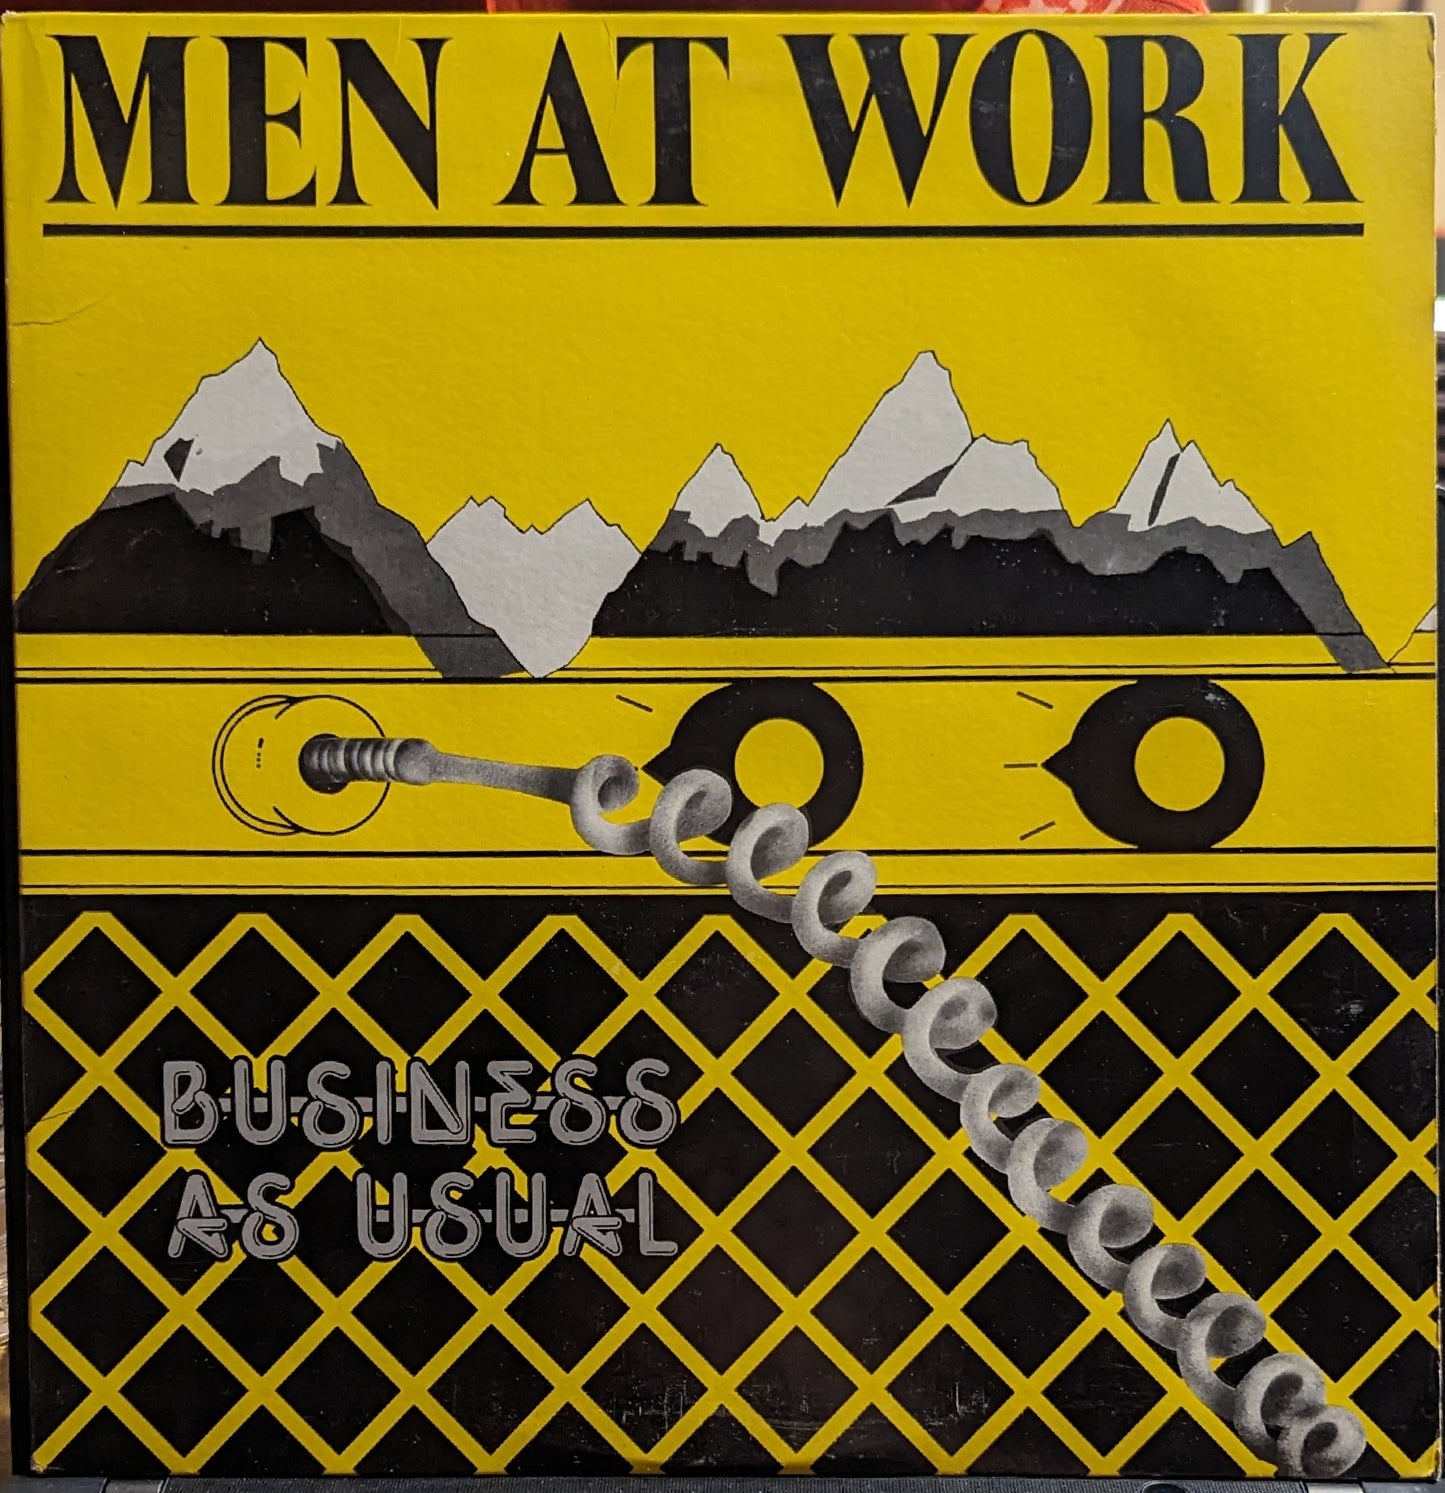 Men At Work Business As Usual *CARROLLTON* LP Excellent (EX) Excellent (EX)